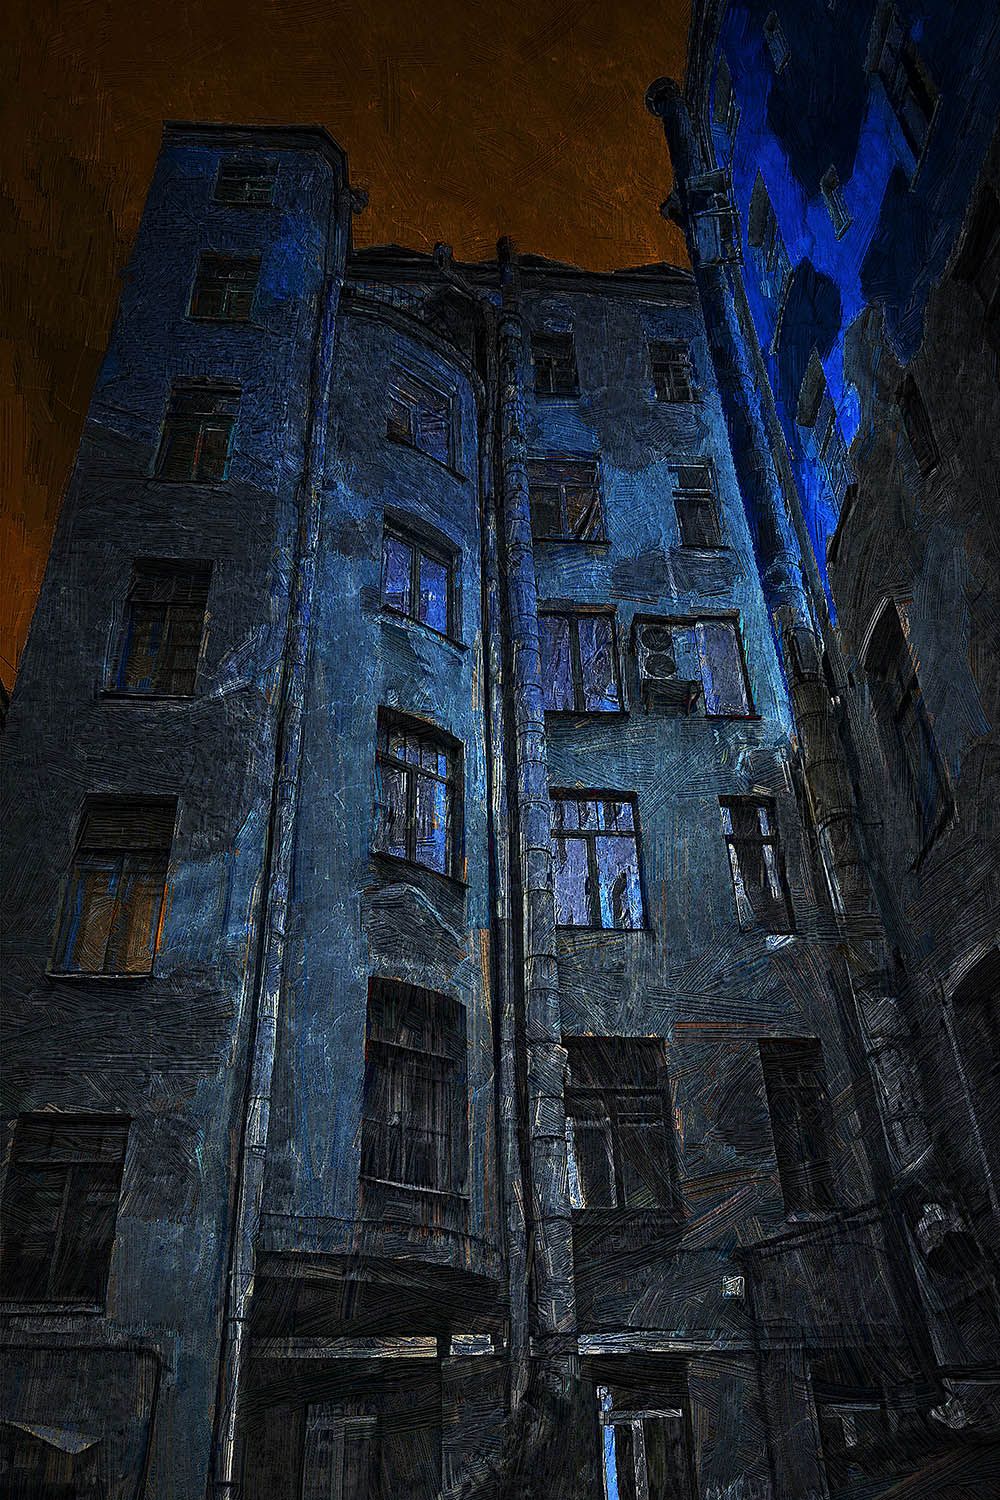 #deep.spb, #deepspb, #санктпетербург, #петербург, #спб, #питер, #saintpetersburg, #petersburg, #spb, #piter, #город, #city, #street, #streetphoto, #streetphotography, #cityscape, #urbex, #urbexphoto, #urbanexploration, #abandoned, #abandonedplaces, #decay, deep.spb